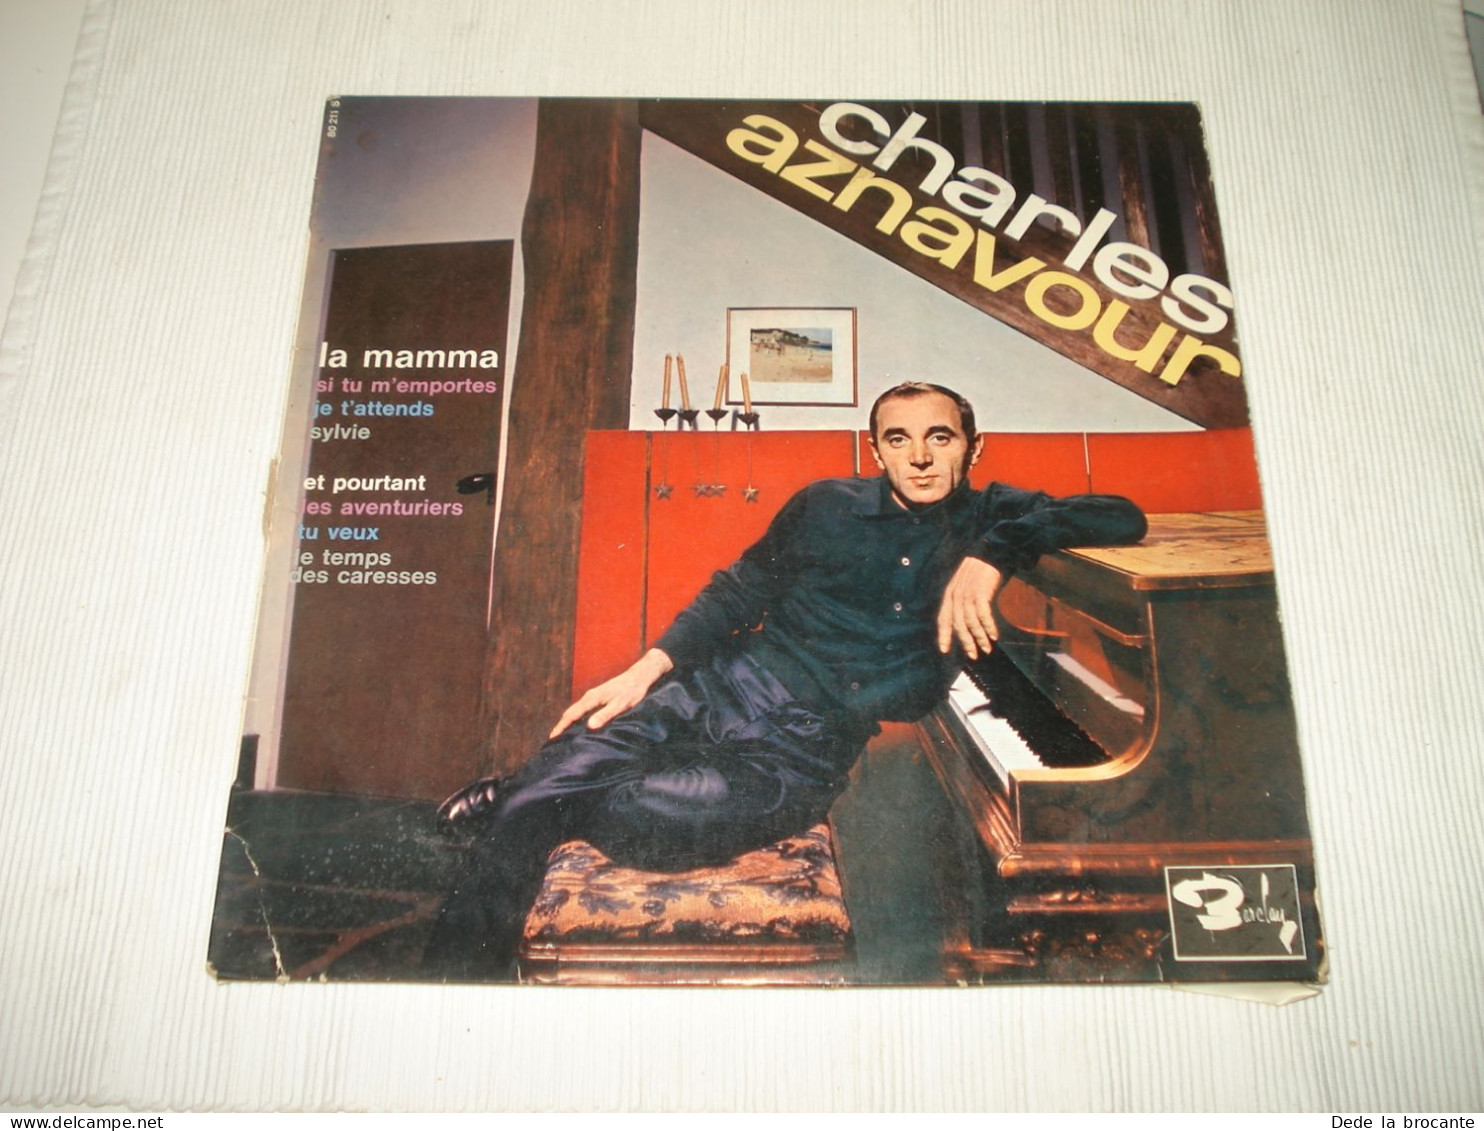 B14 / Charles Aznavour – La Mamma - 33T - 10" – 80 211 - FR 1963  VG+/VG- - Speciale Formaten